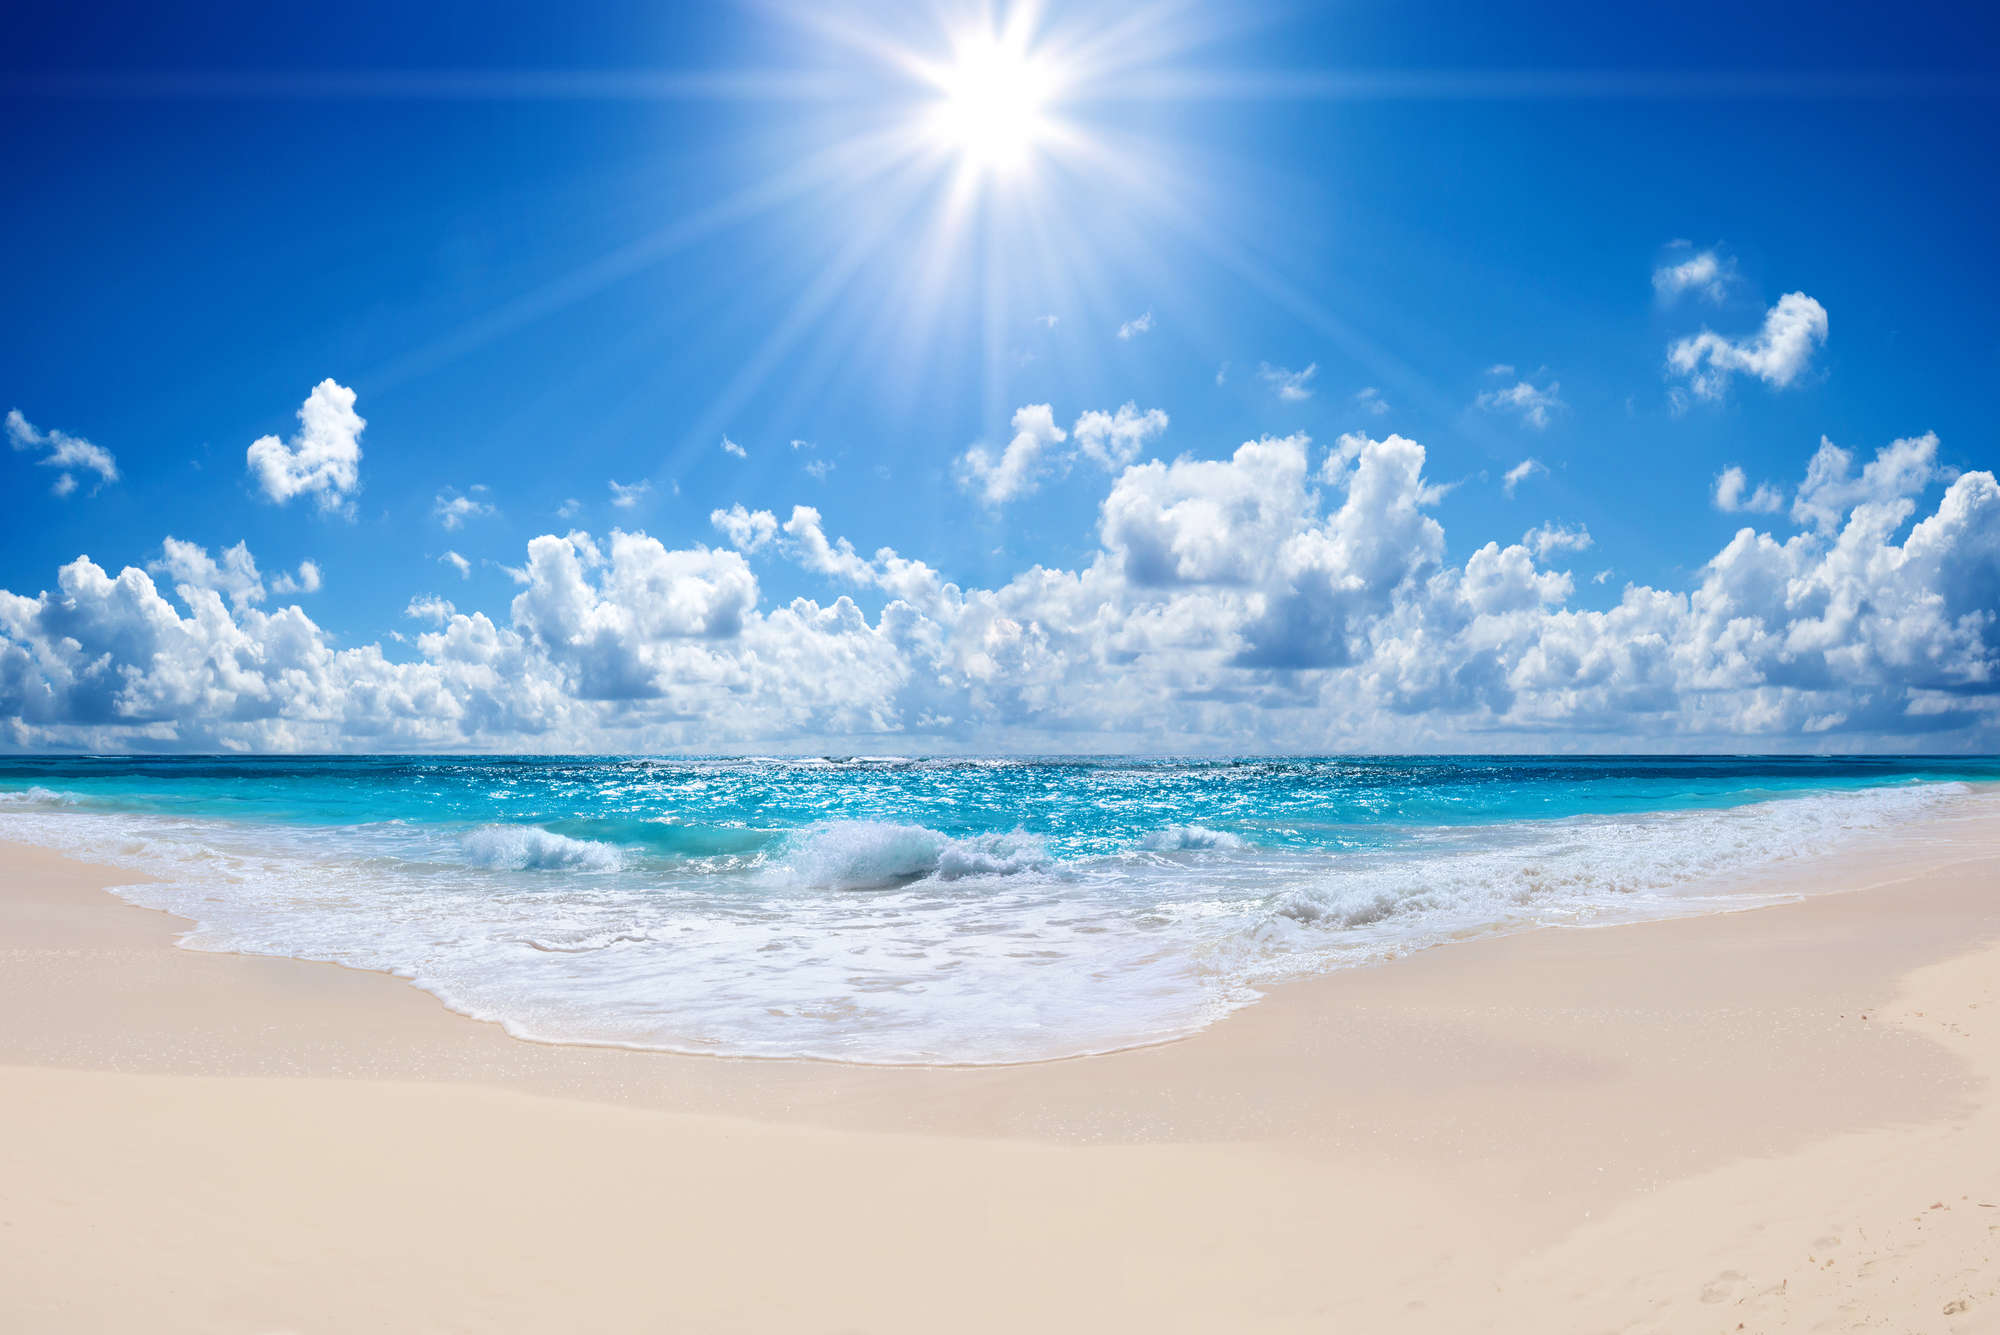             Strand Fototapete Wellengang mit strahlender Sonne auf Strukturvlies
        